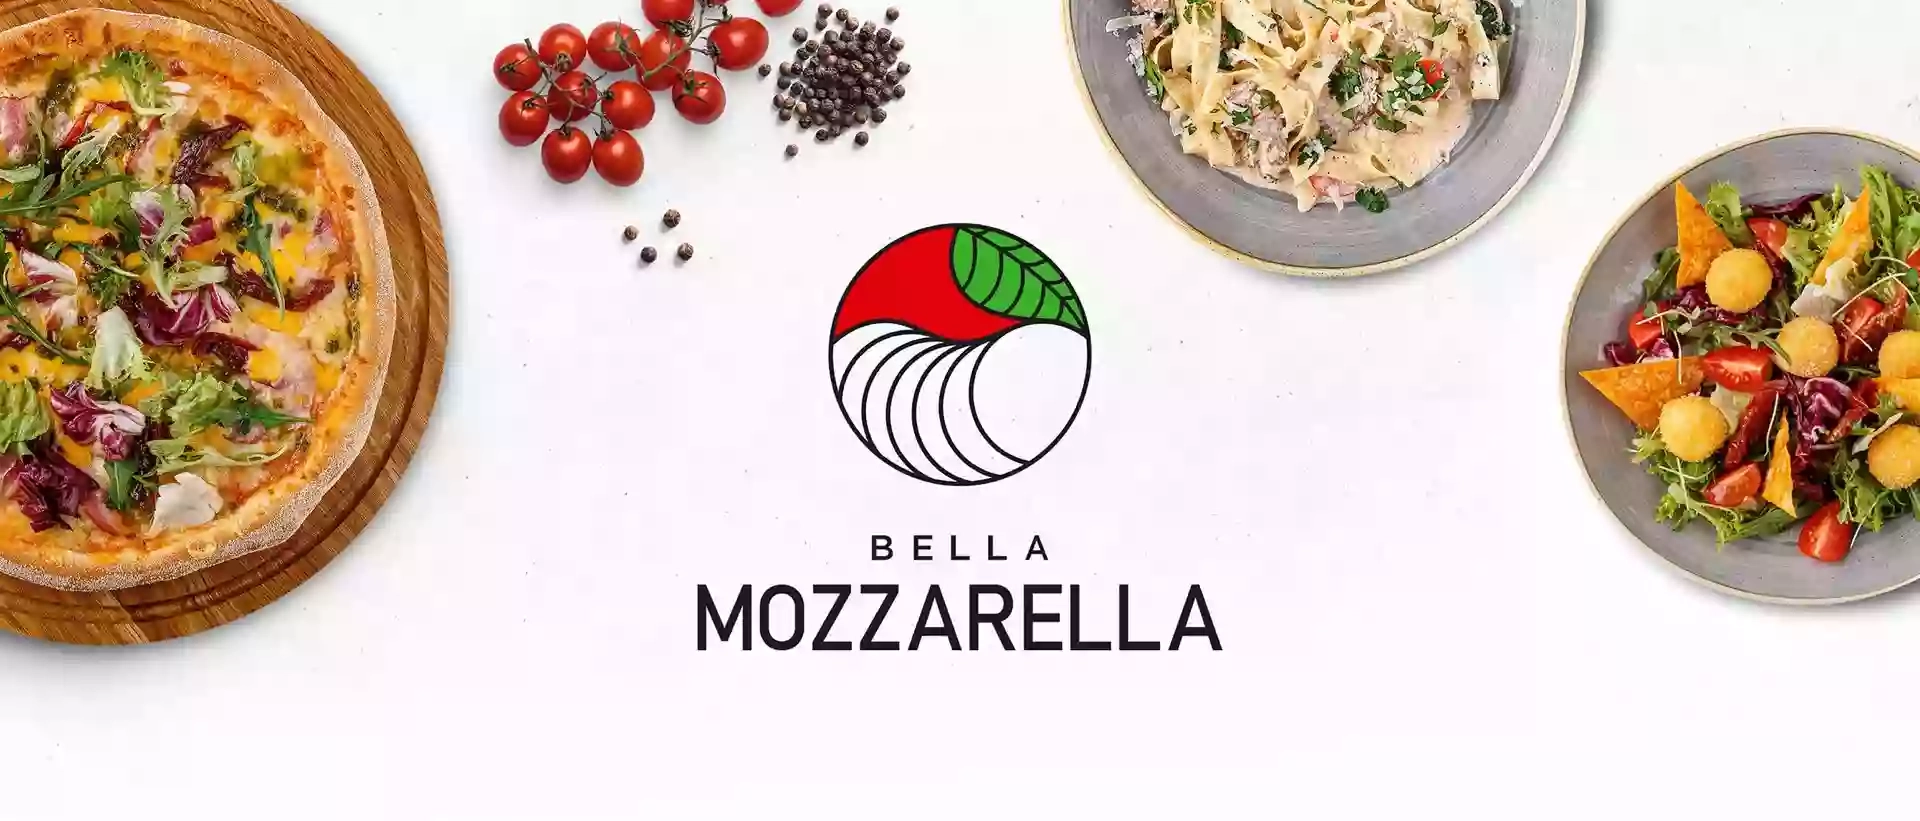 Bella Mozzarella 